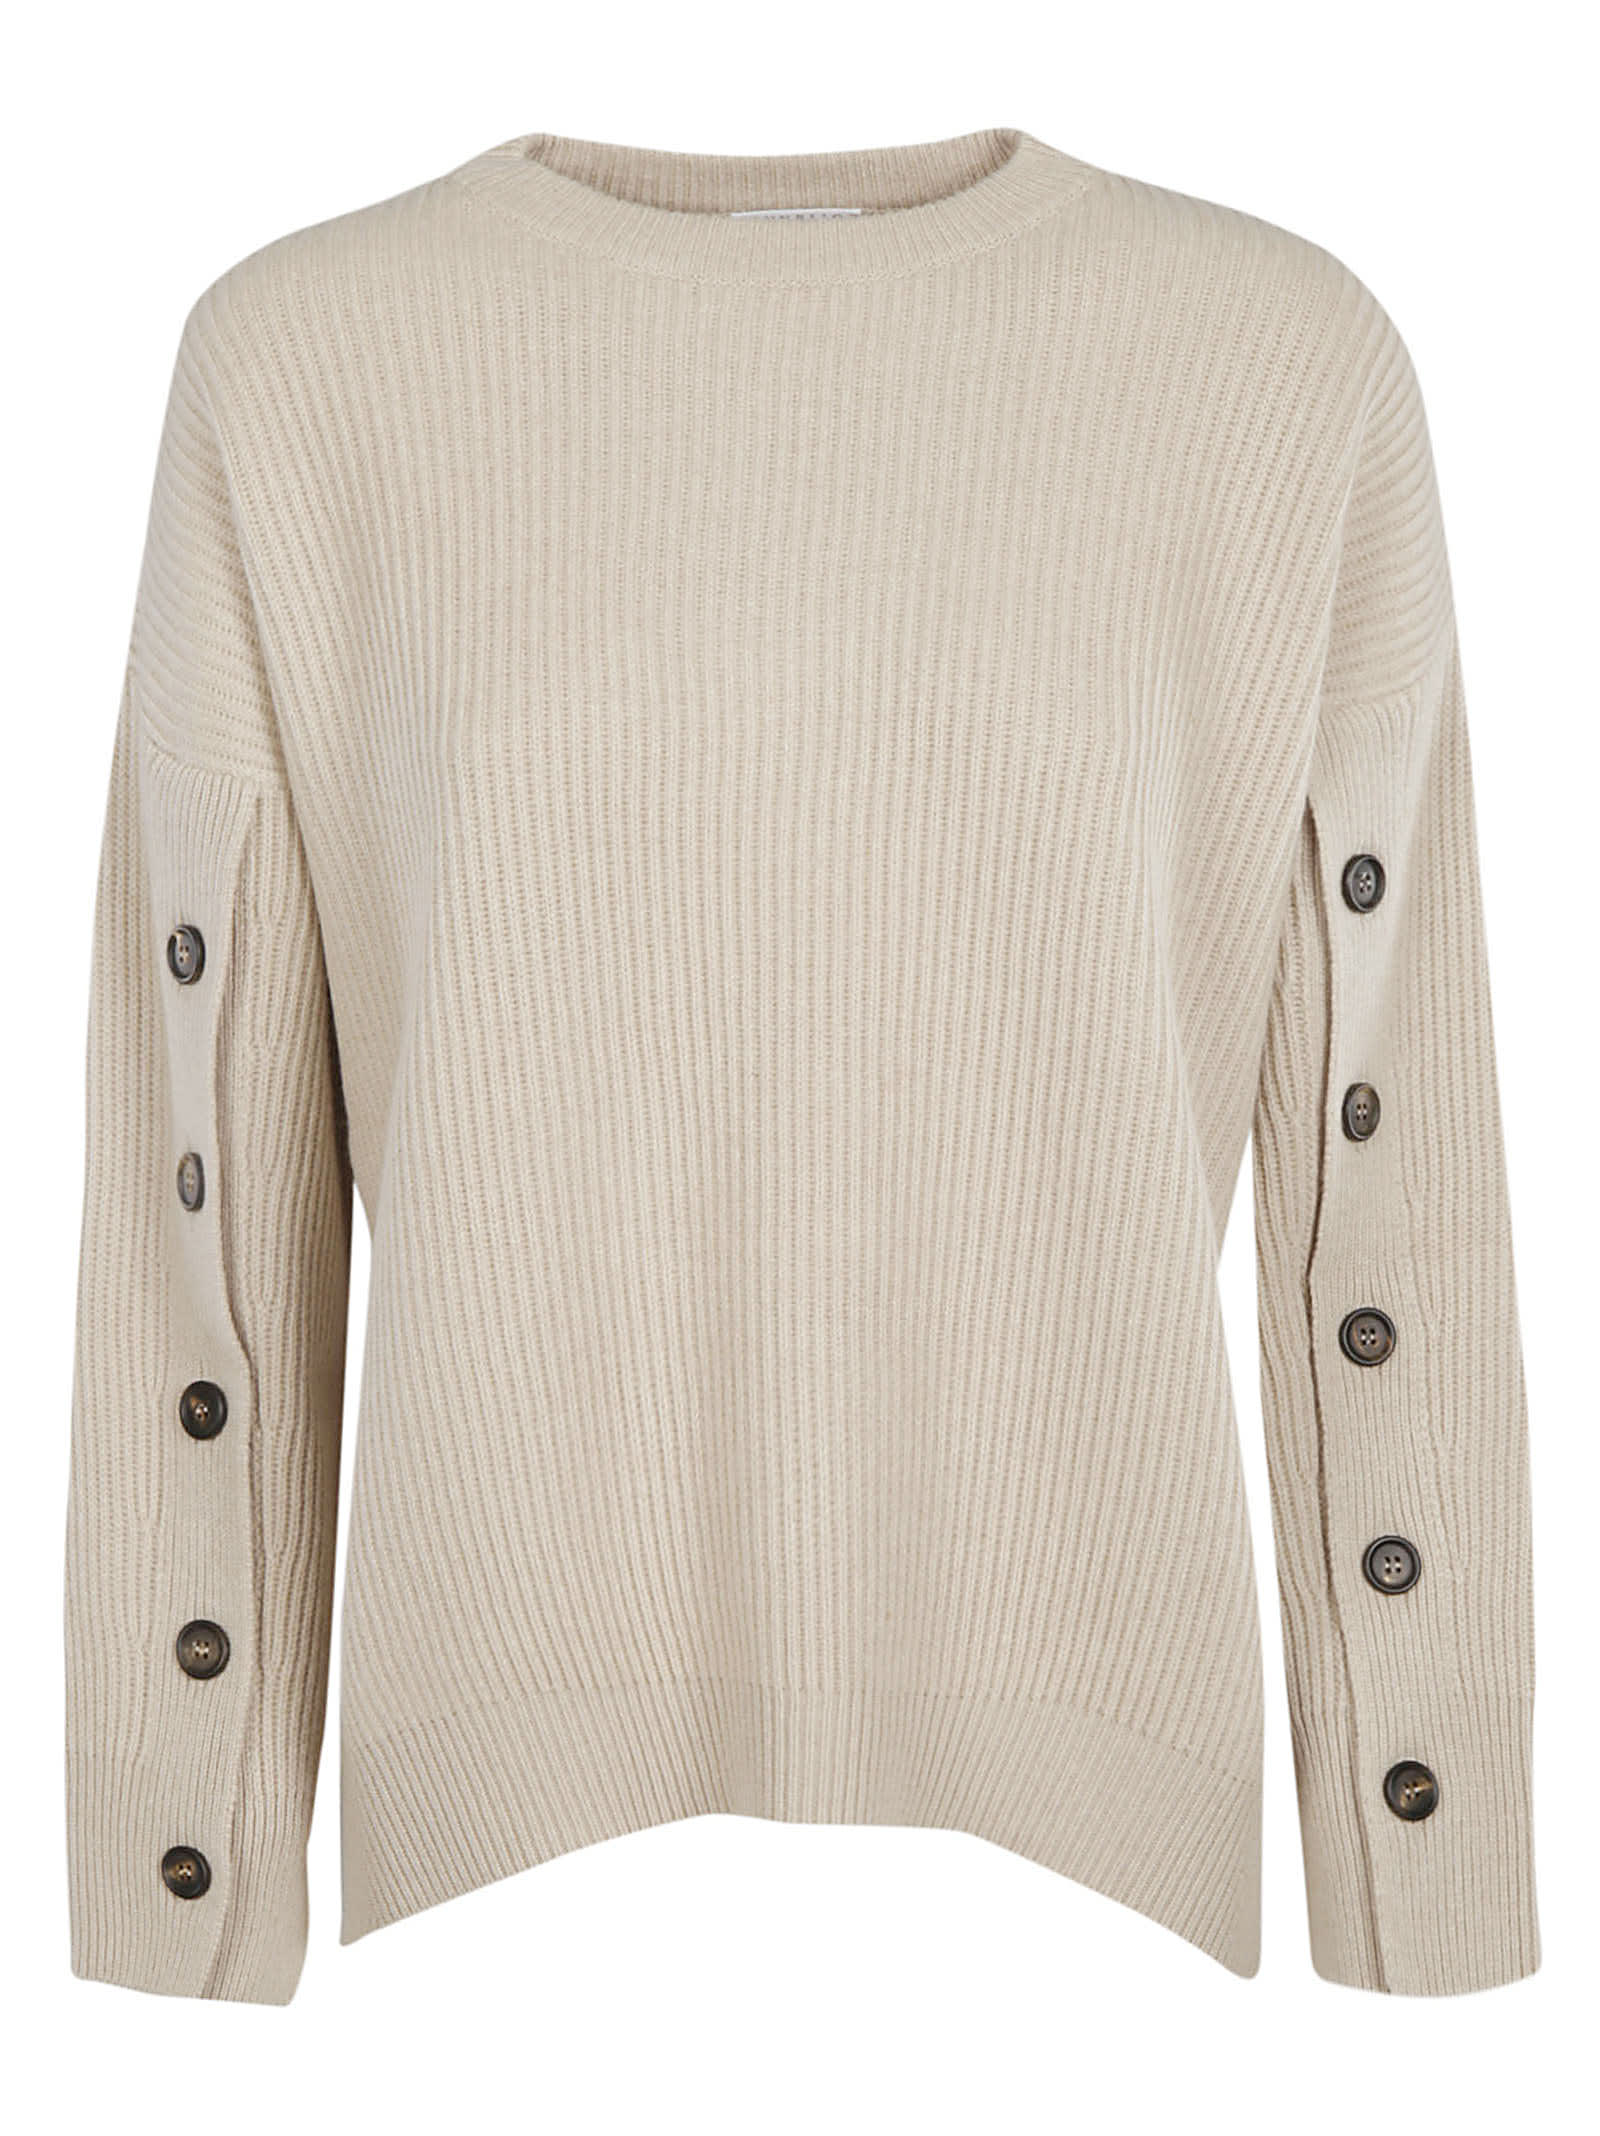 Brunello Cucinelli Multi-button Sleeve Sweater